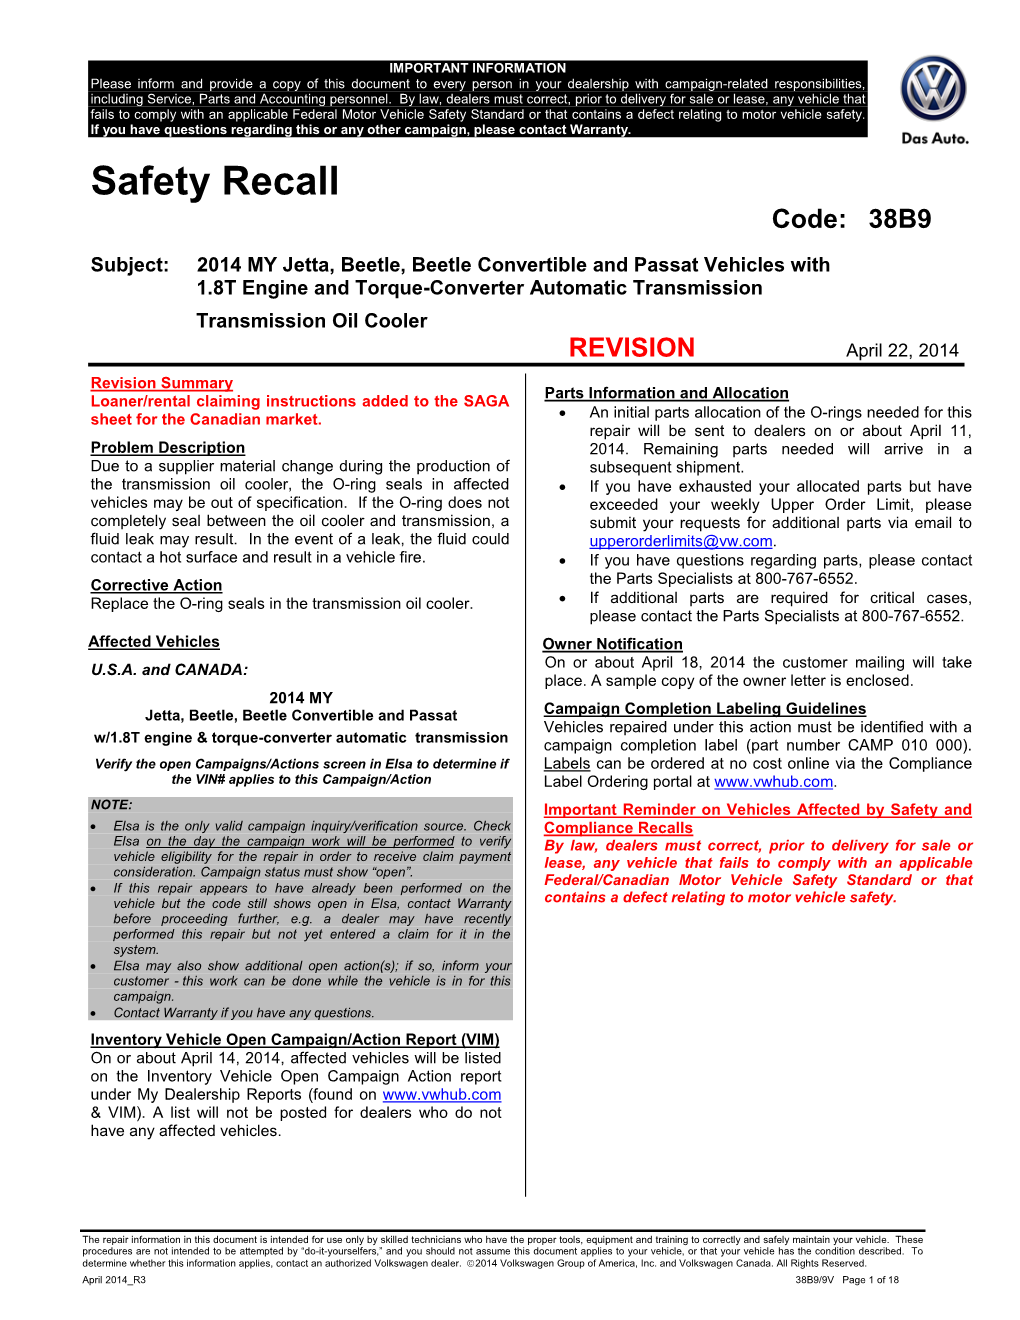 Safety Recall Code: 38B9